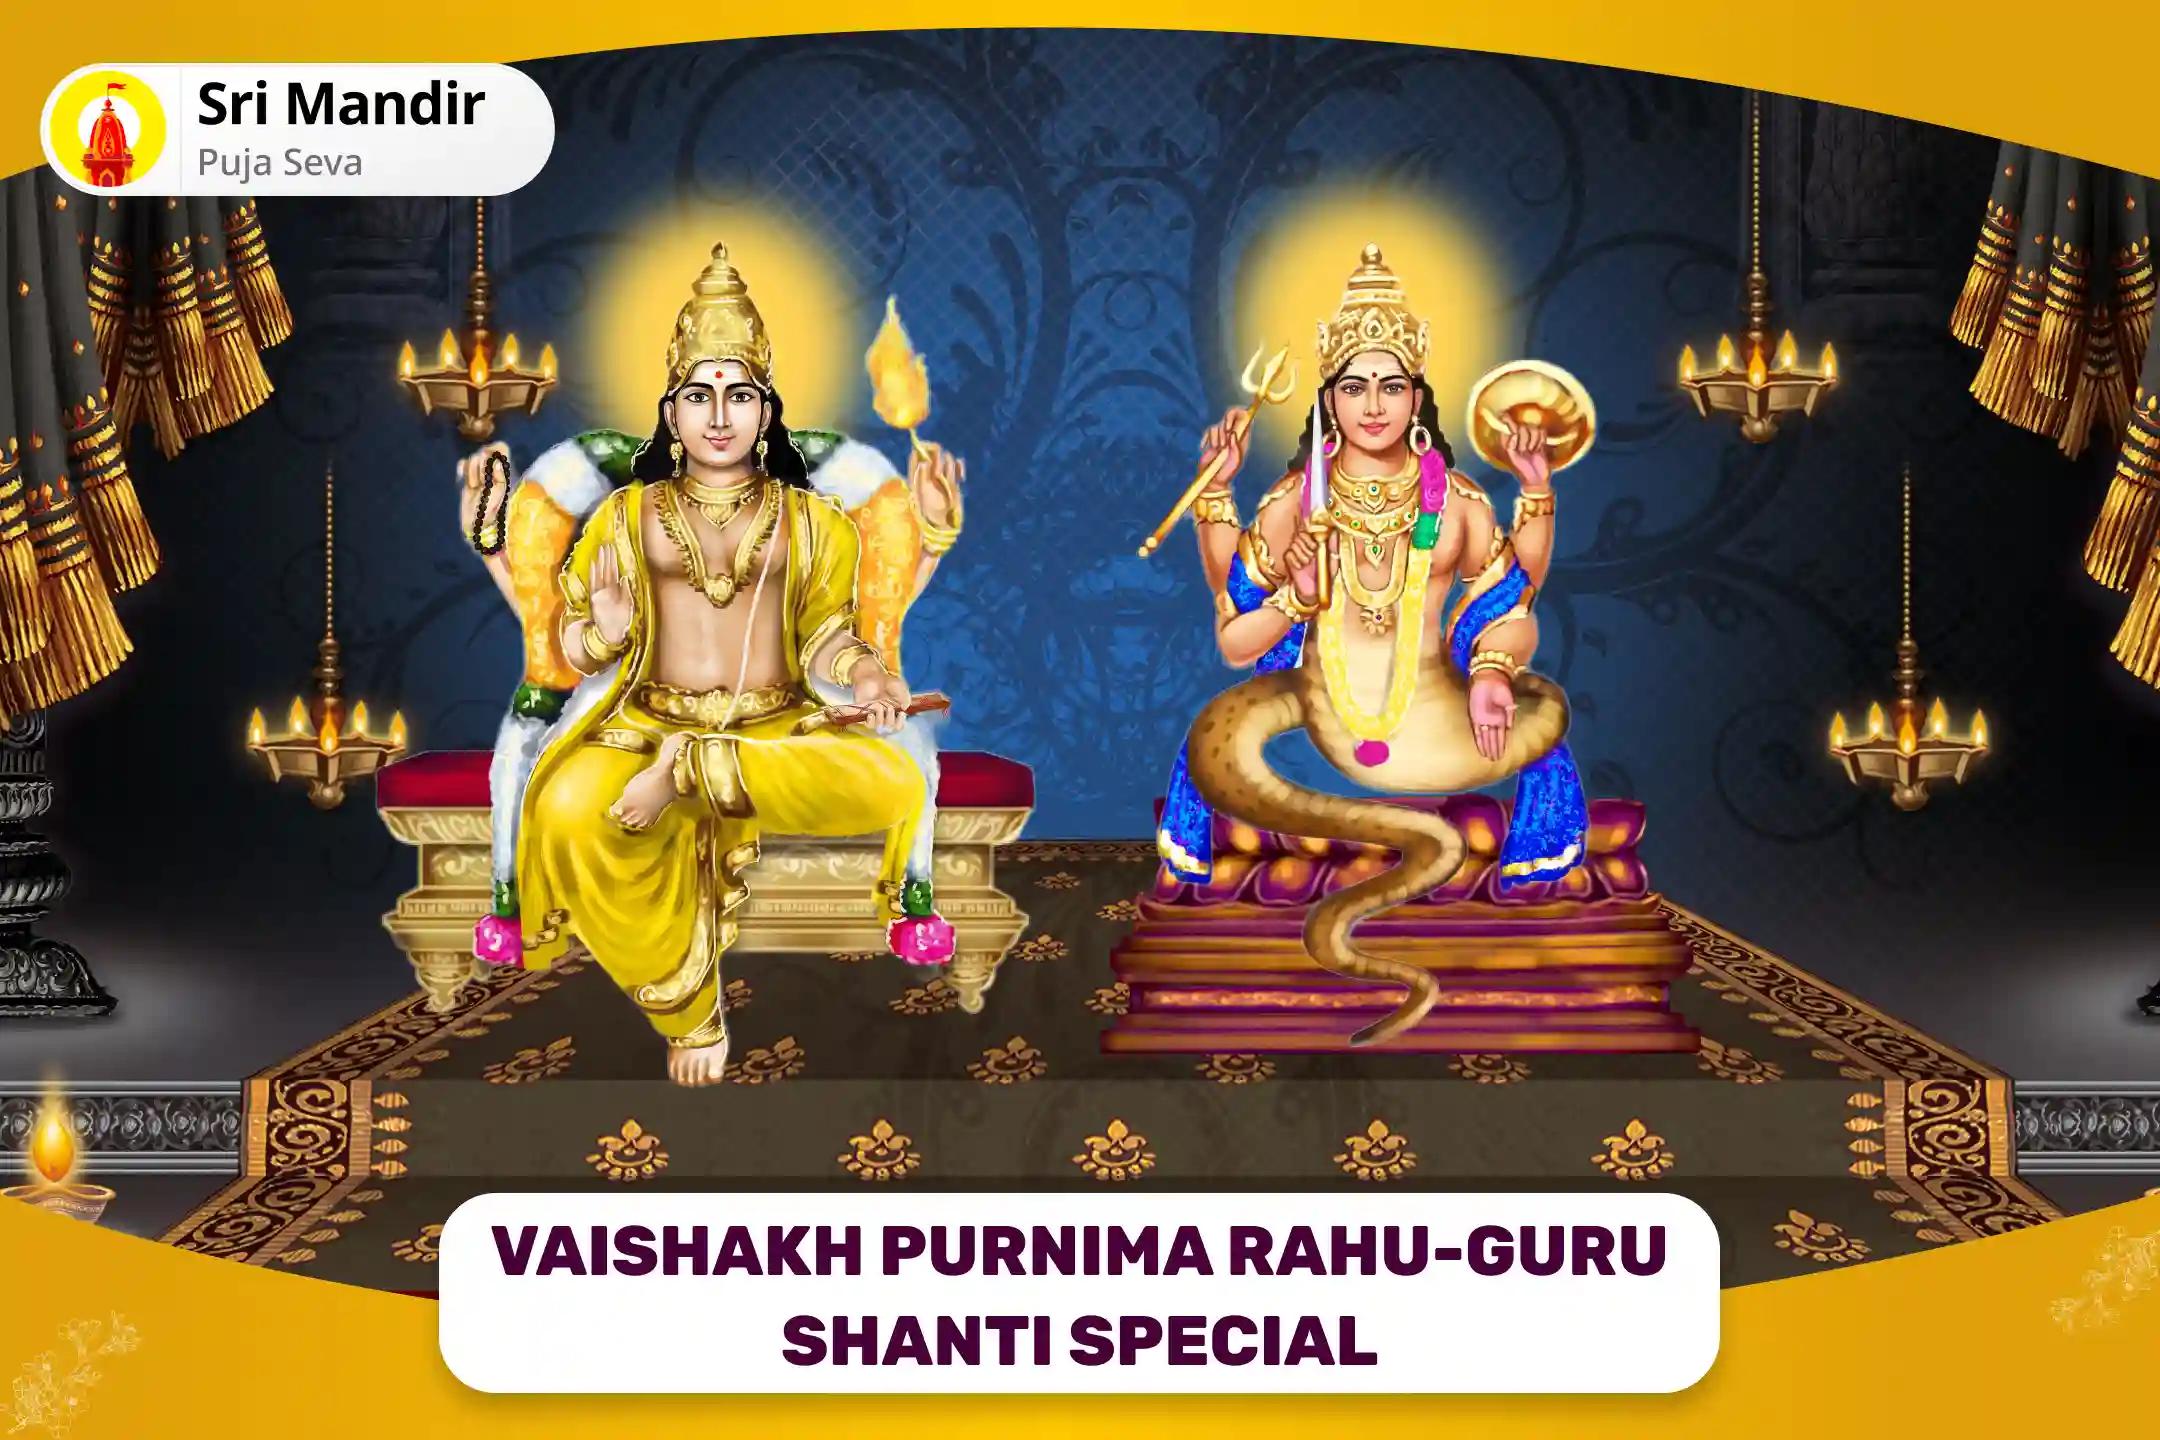 Vaishakh Purnima Rahu-Guru Shanti Special Chandal Dosha Nivaran Mahapuja for Prosperity and Material Well-Being